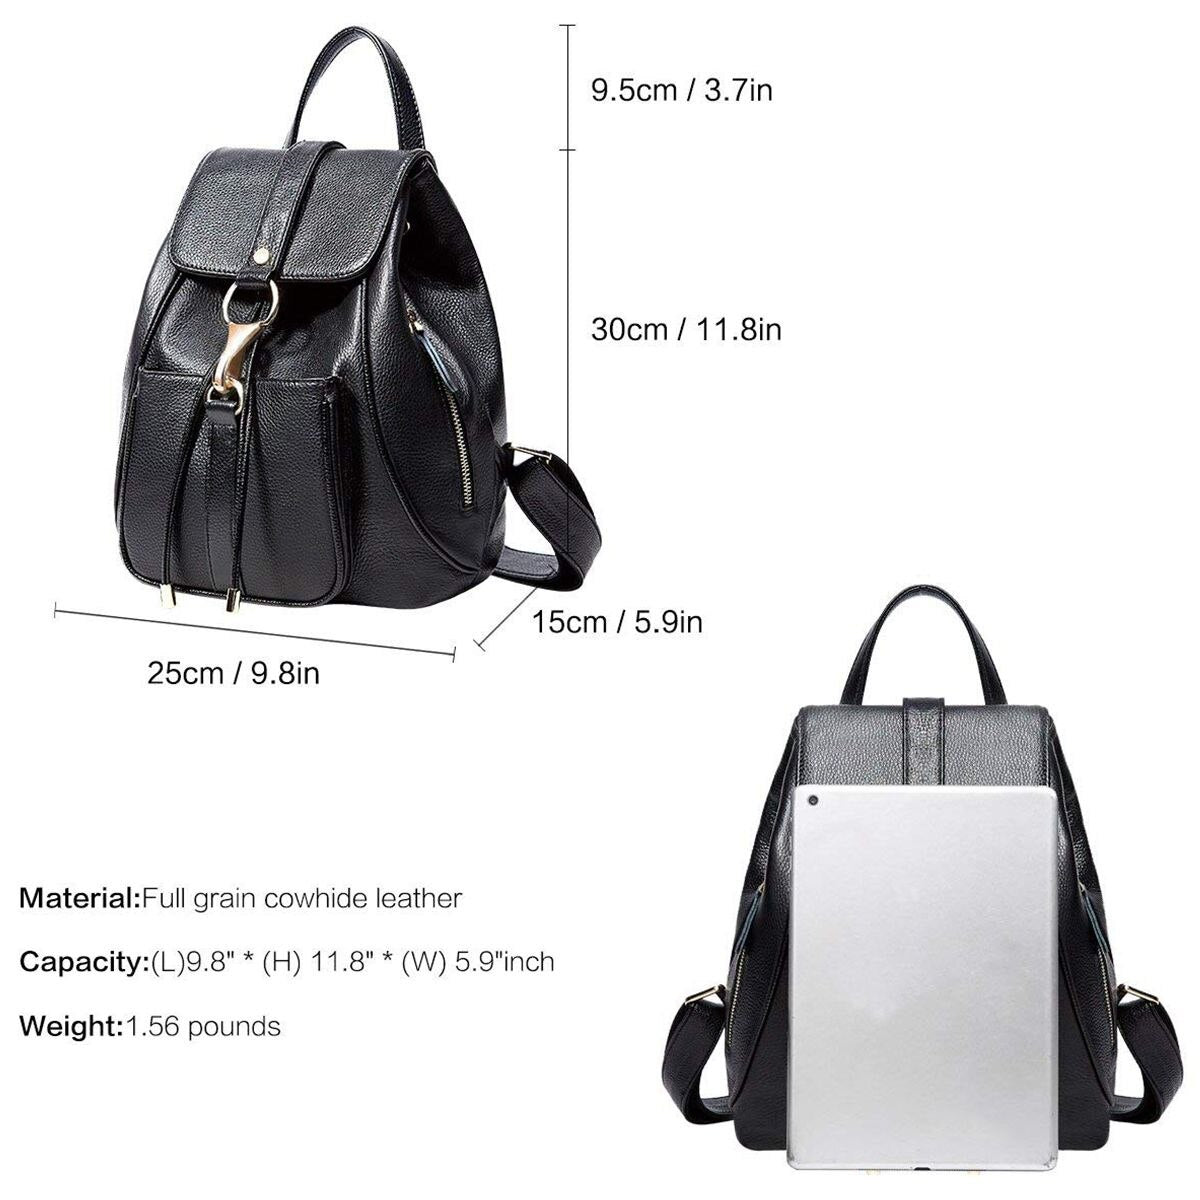 Leather Backpacks Purse for Women Ladies Fashion Travel Shoulder Bag (Black) - ebowsos